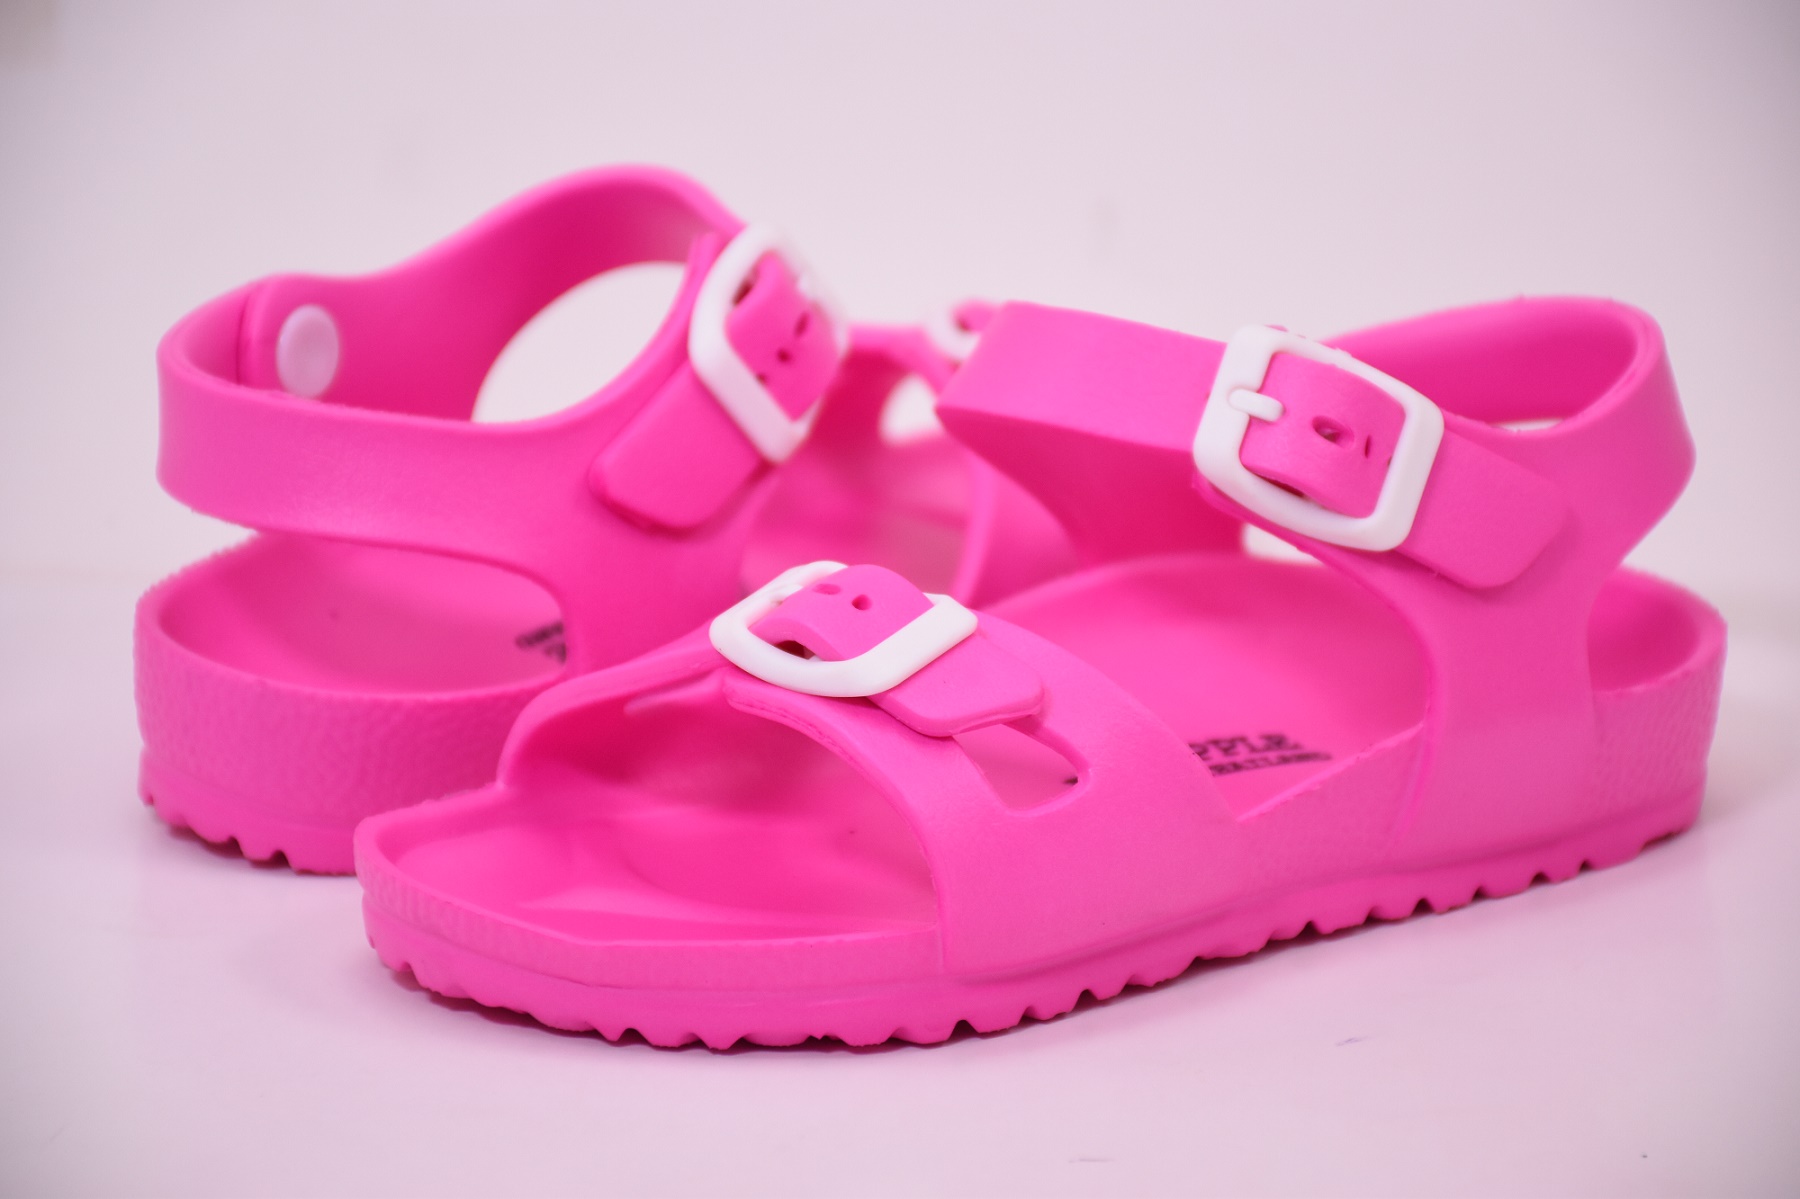 (PINK)Unisex Thailand Red Apple Double Straps Kids Sandals Shoes BG2566